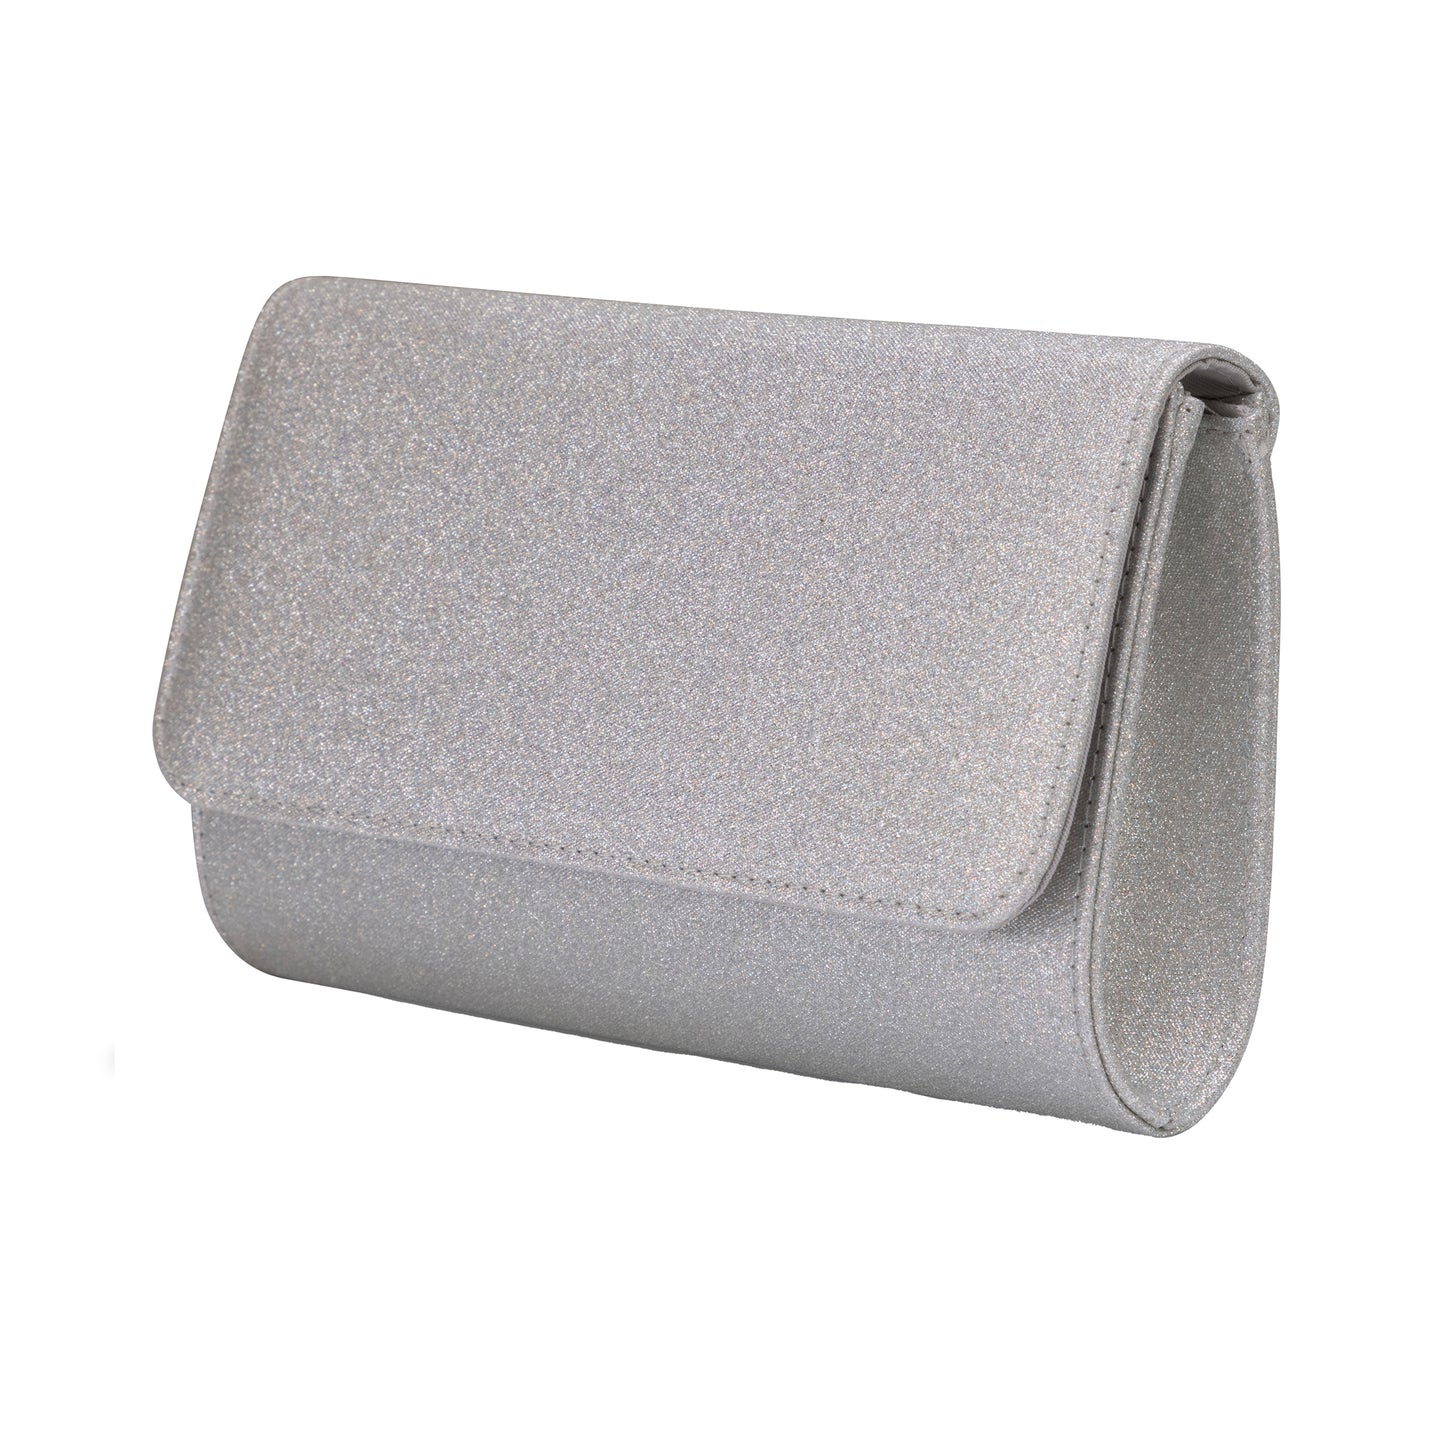 Evie silver shimmer clutch bag